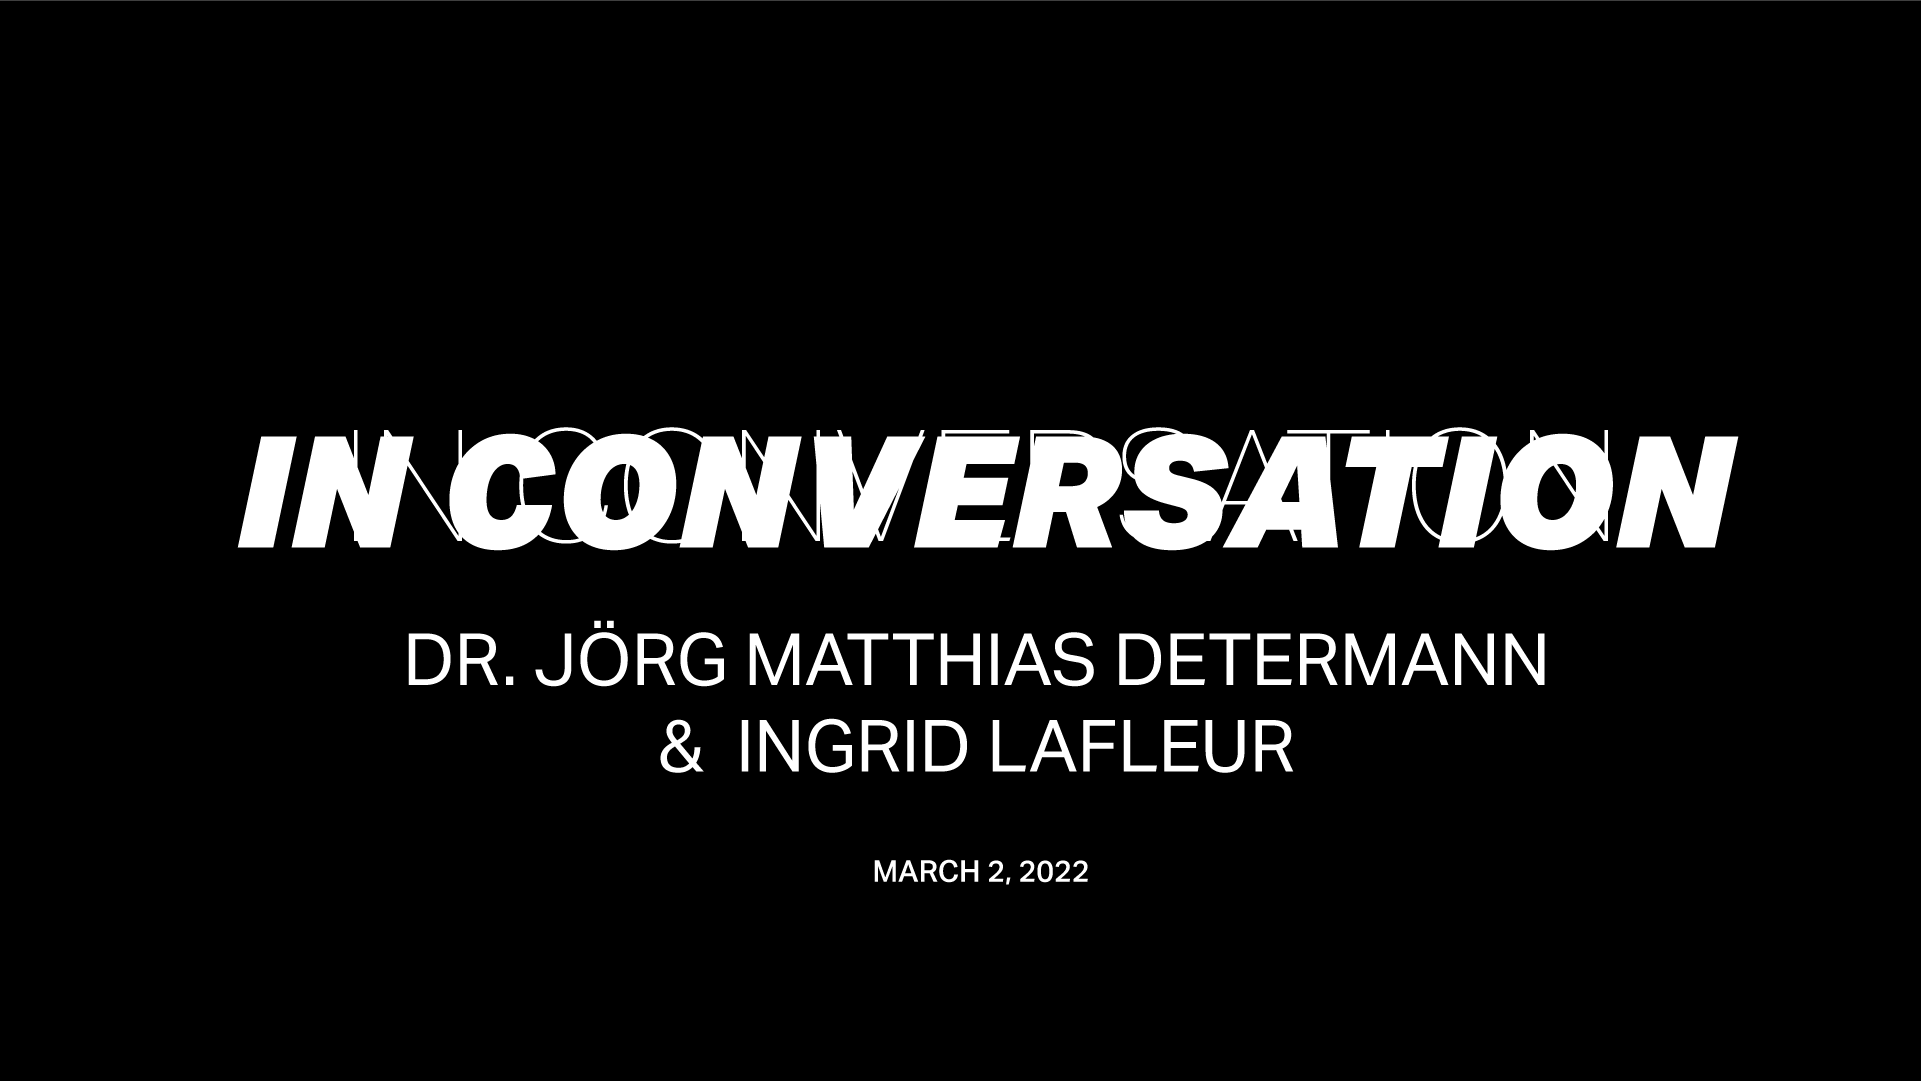 In Conversation with Dr. Jorg Matthias Determann & Ingrid LaFleur